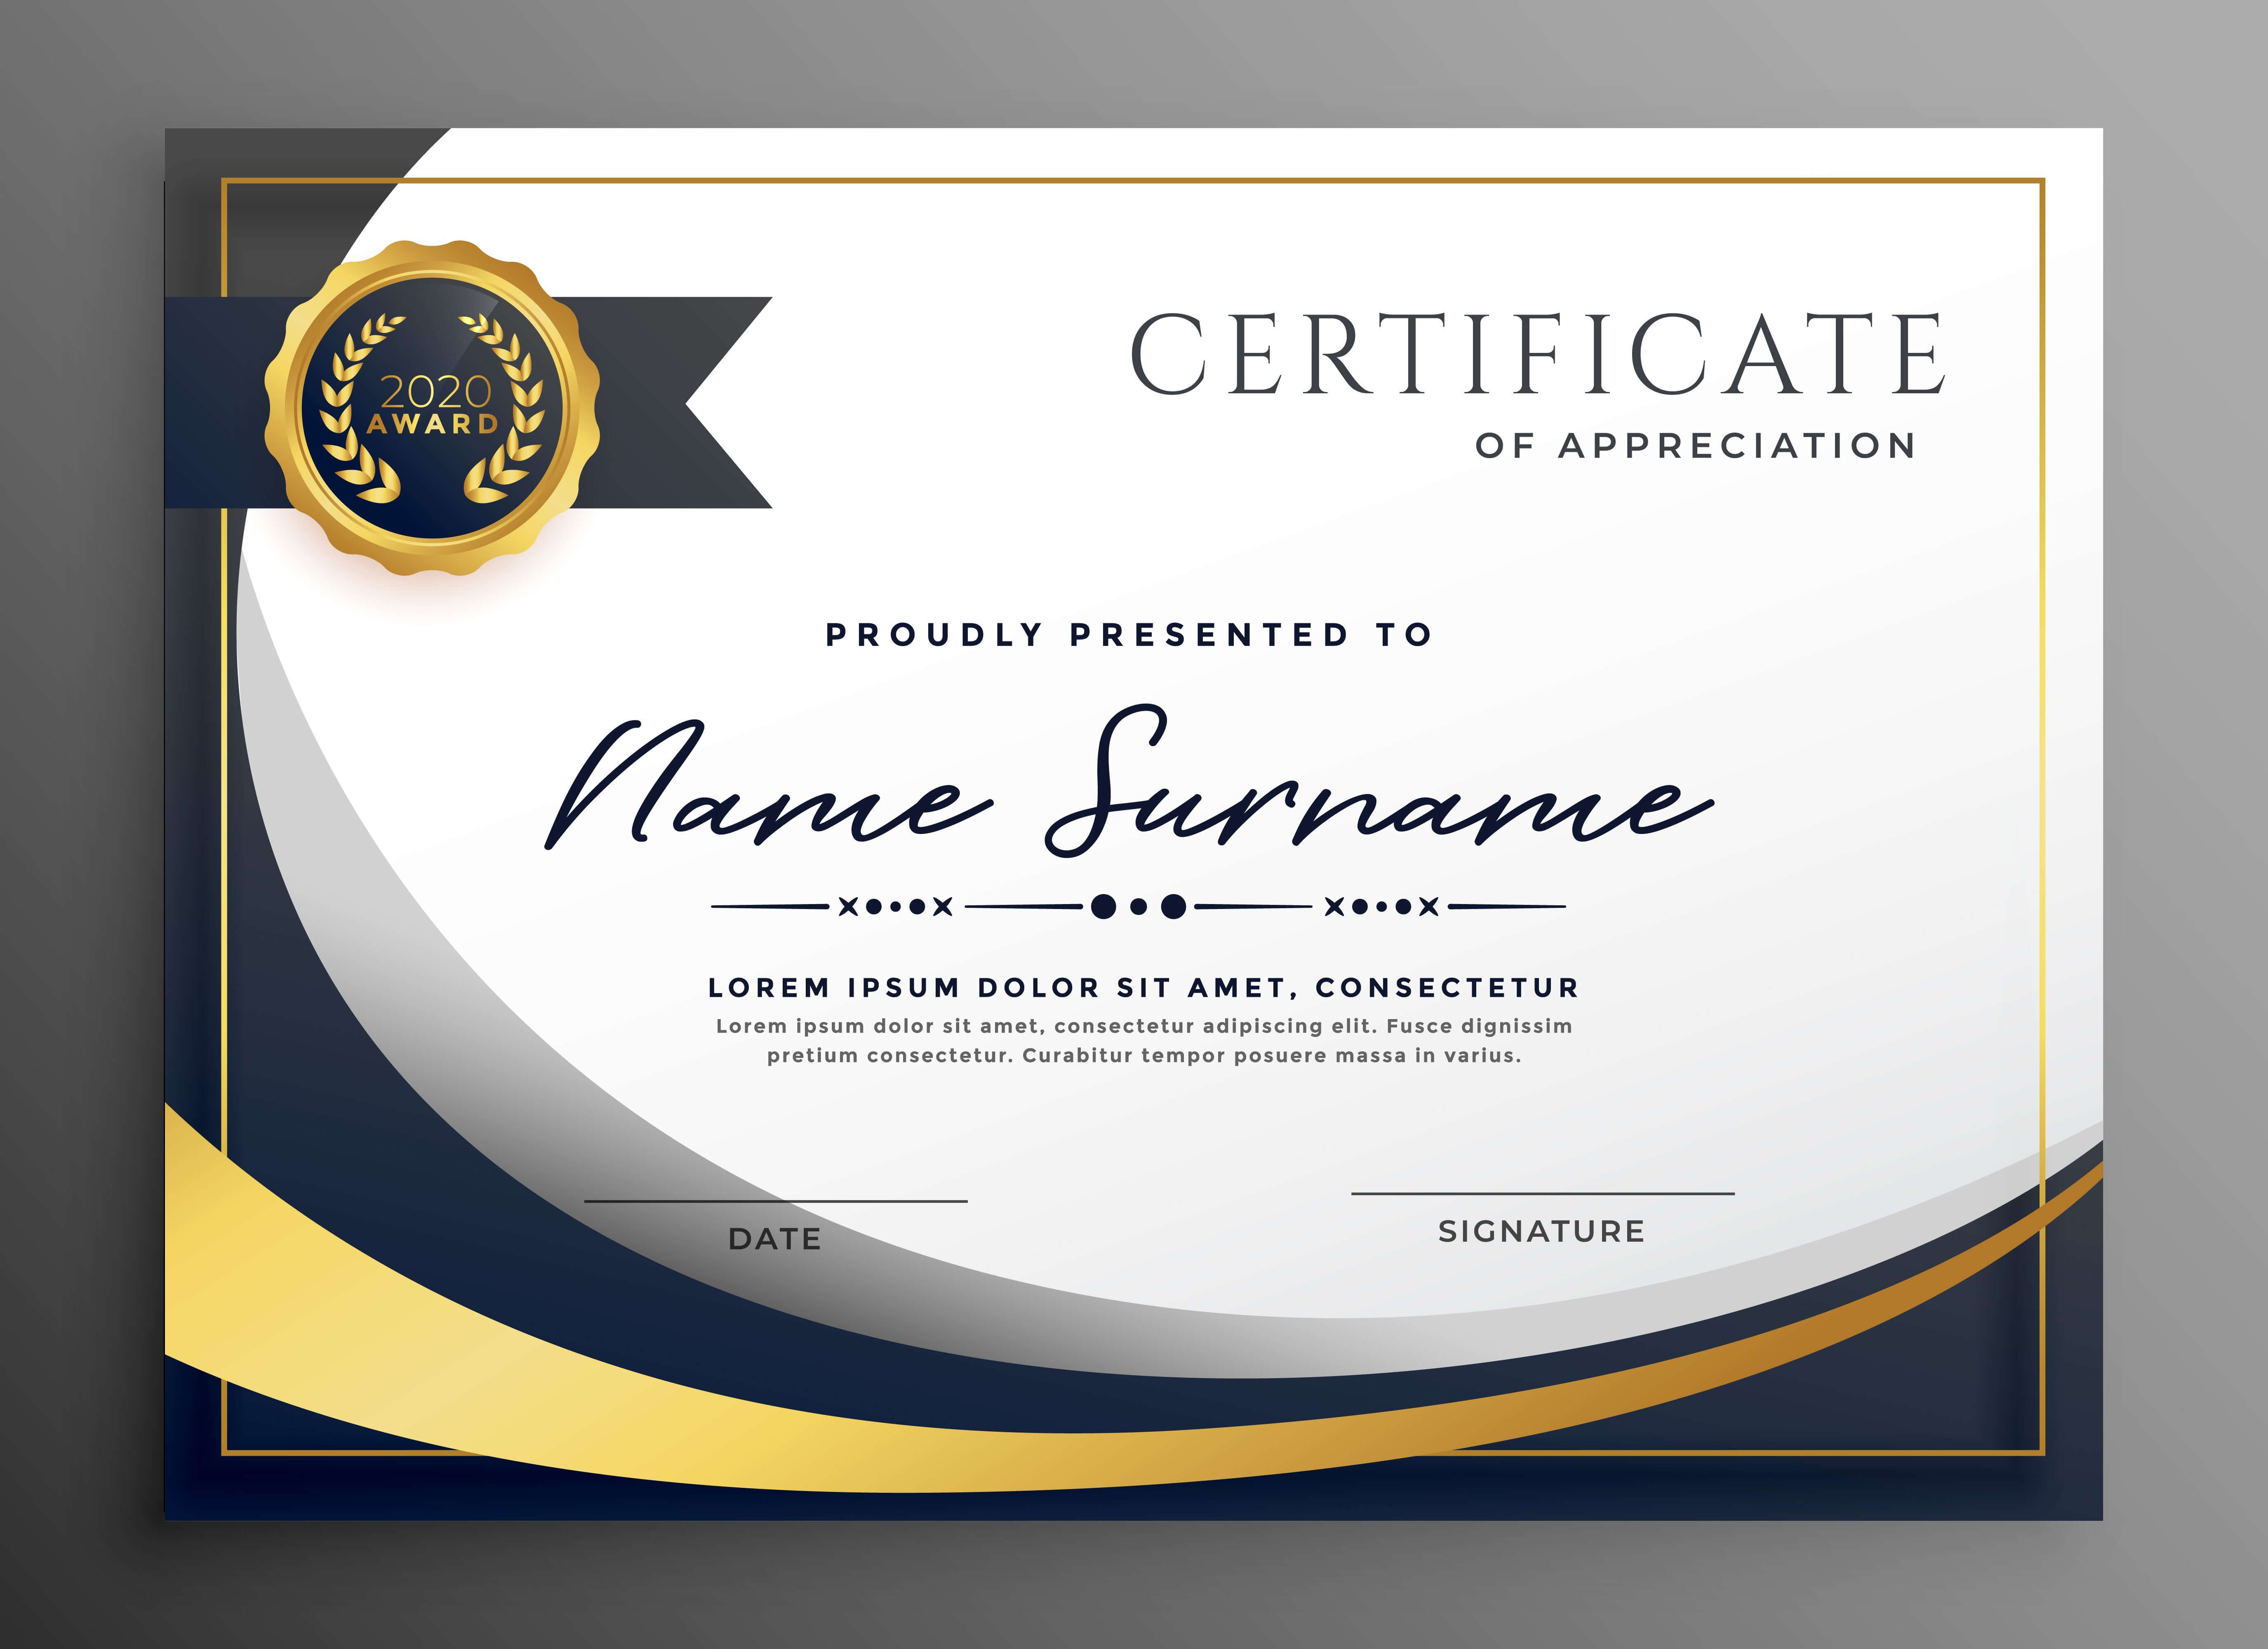 Premium Wavy Certificate Template Design | Certificate With Award Certificate Design Template